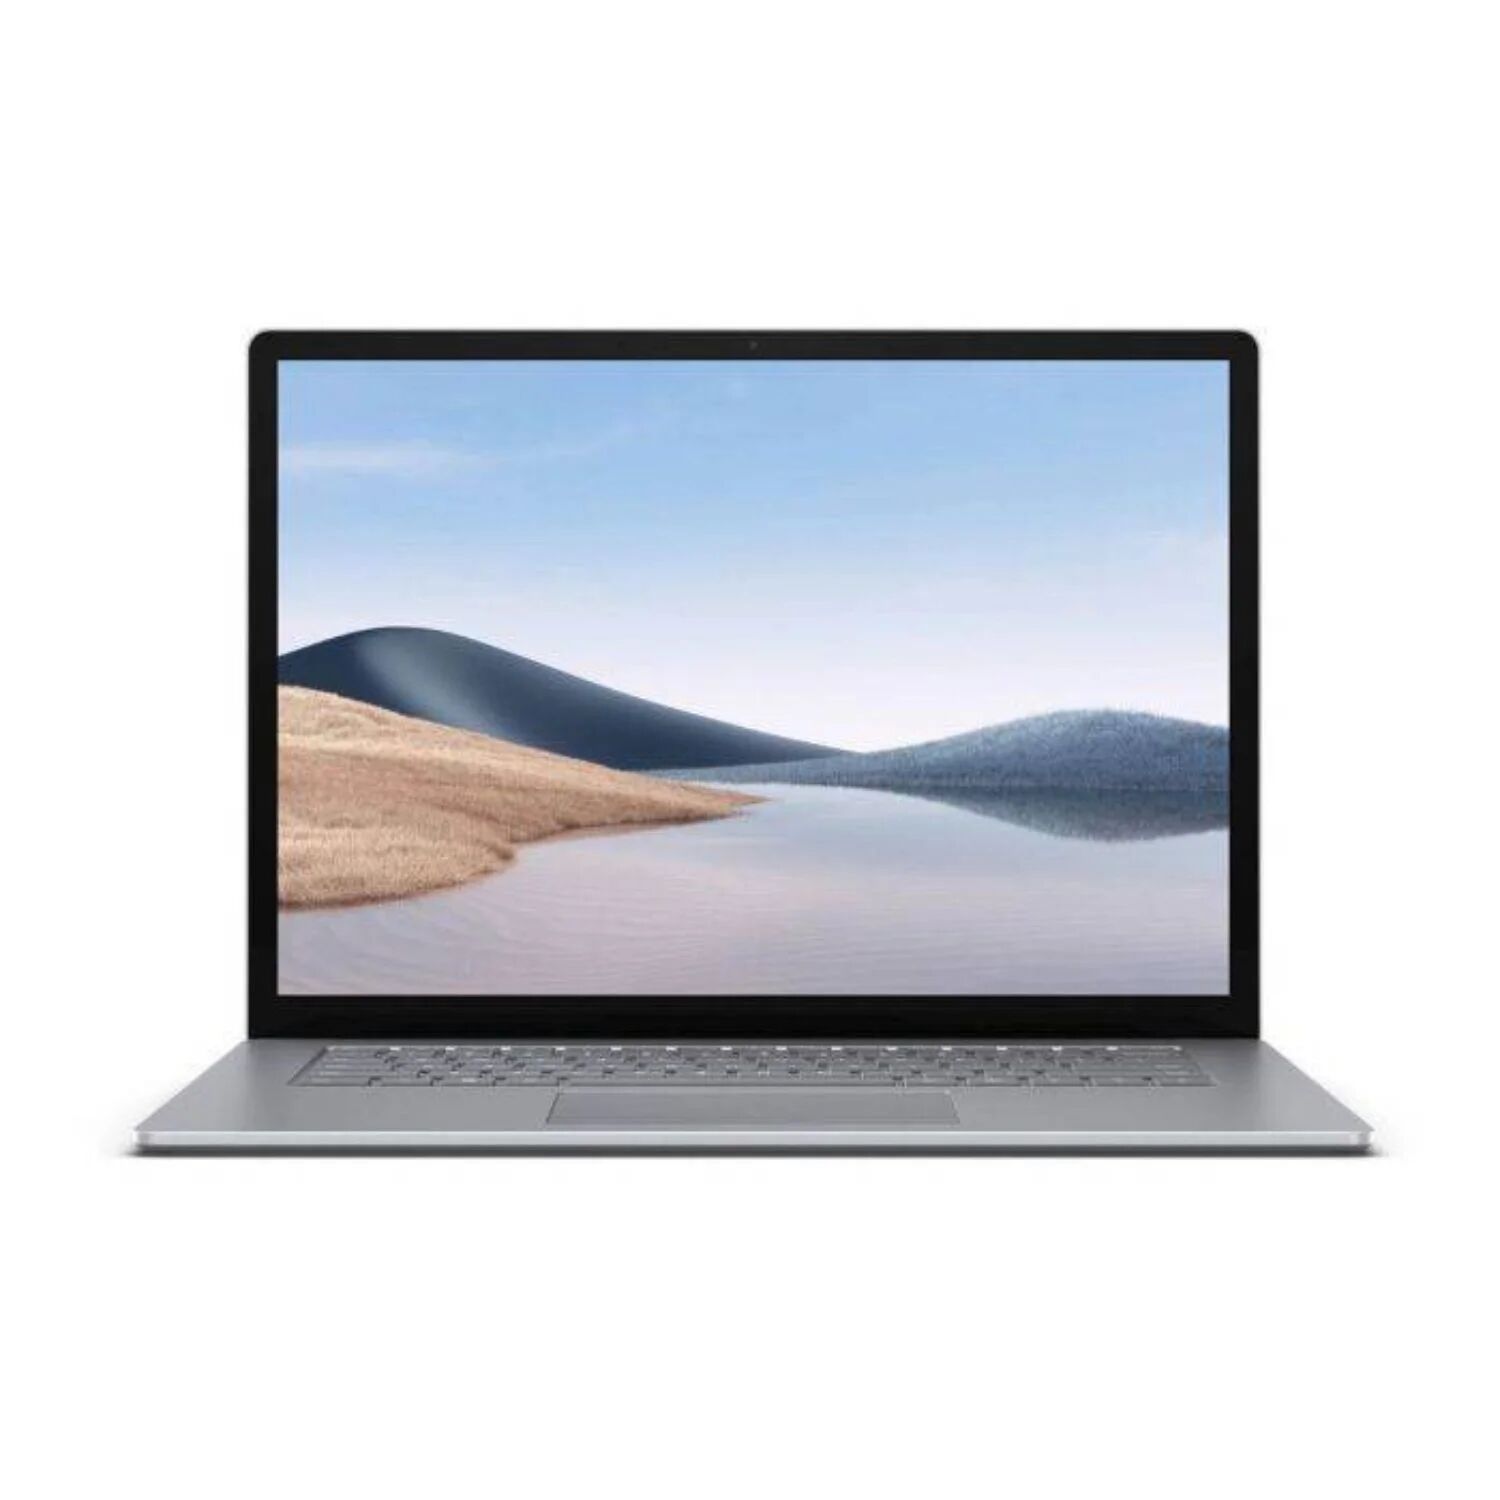 Microsoft Surface Laptop 4 Core i7-1185G7 16GB 512GB 15Inch Windows 10 Pro Touchscreen Laptop - Platinum